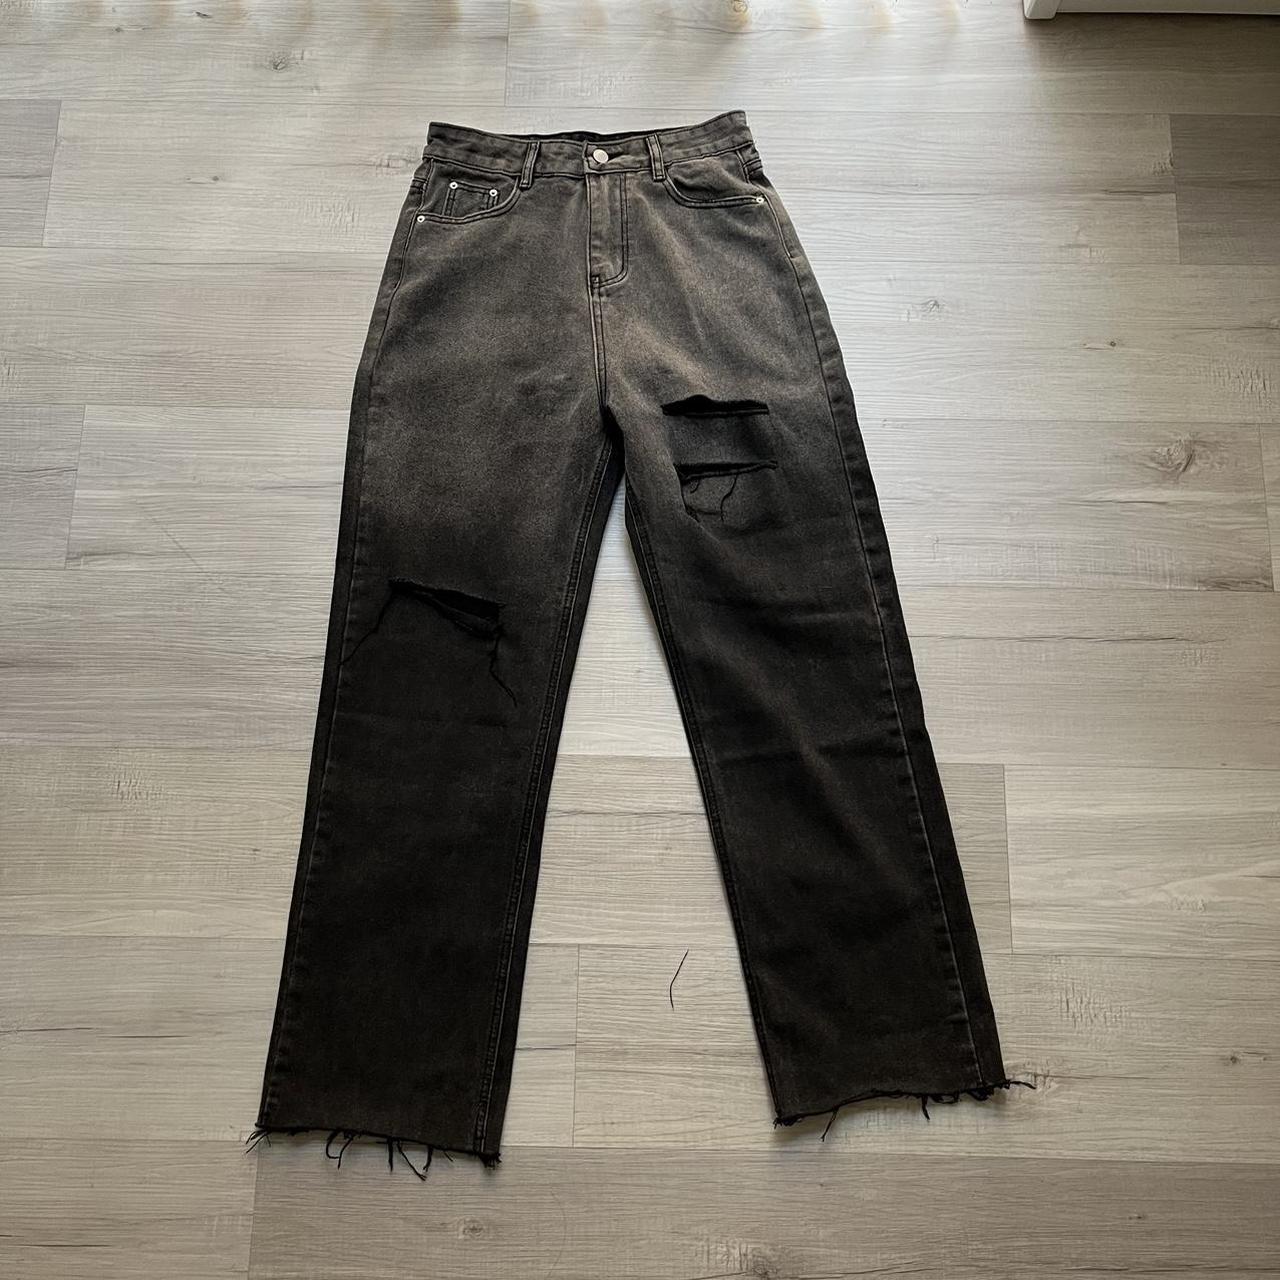 Stylenanda Women's Grey and Black Jeans (2)